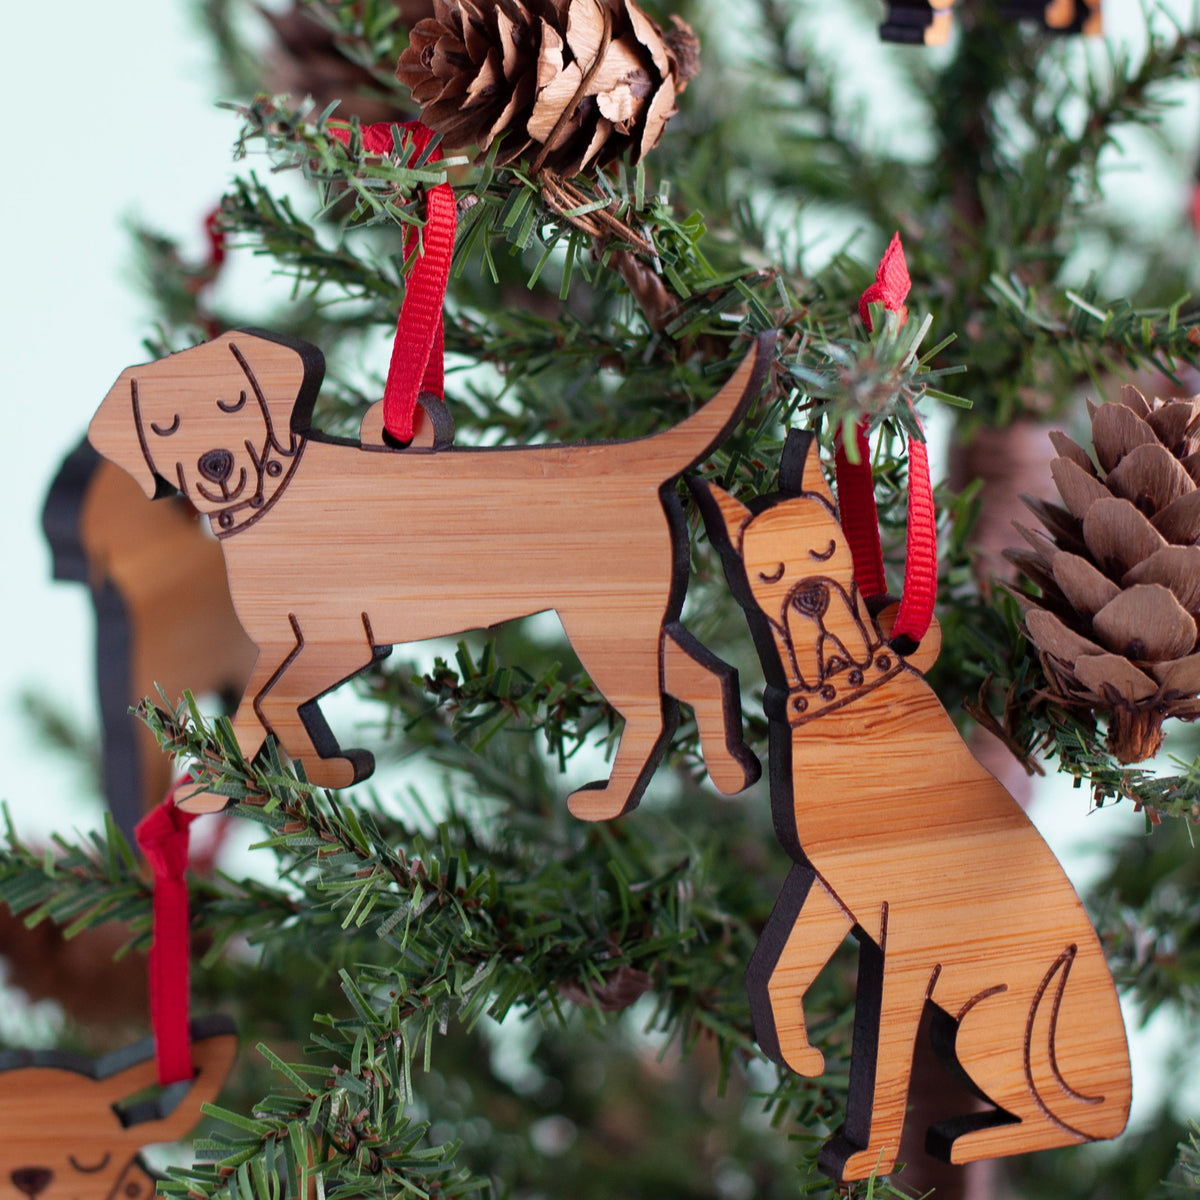 Mini Dog Christmas Ornaments: Bamboo (Set of 6)